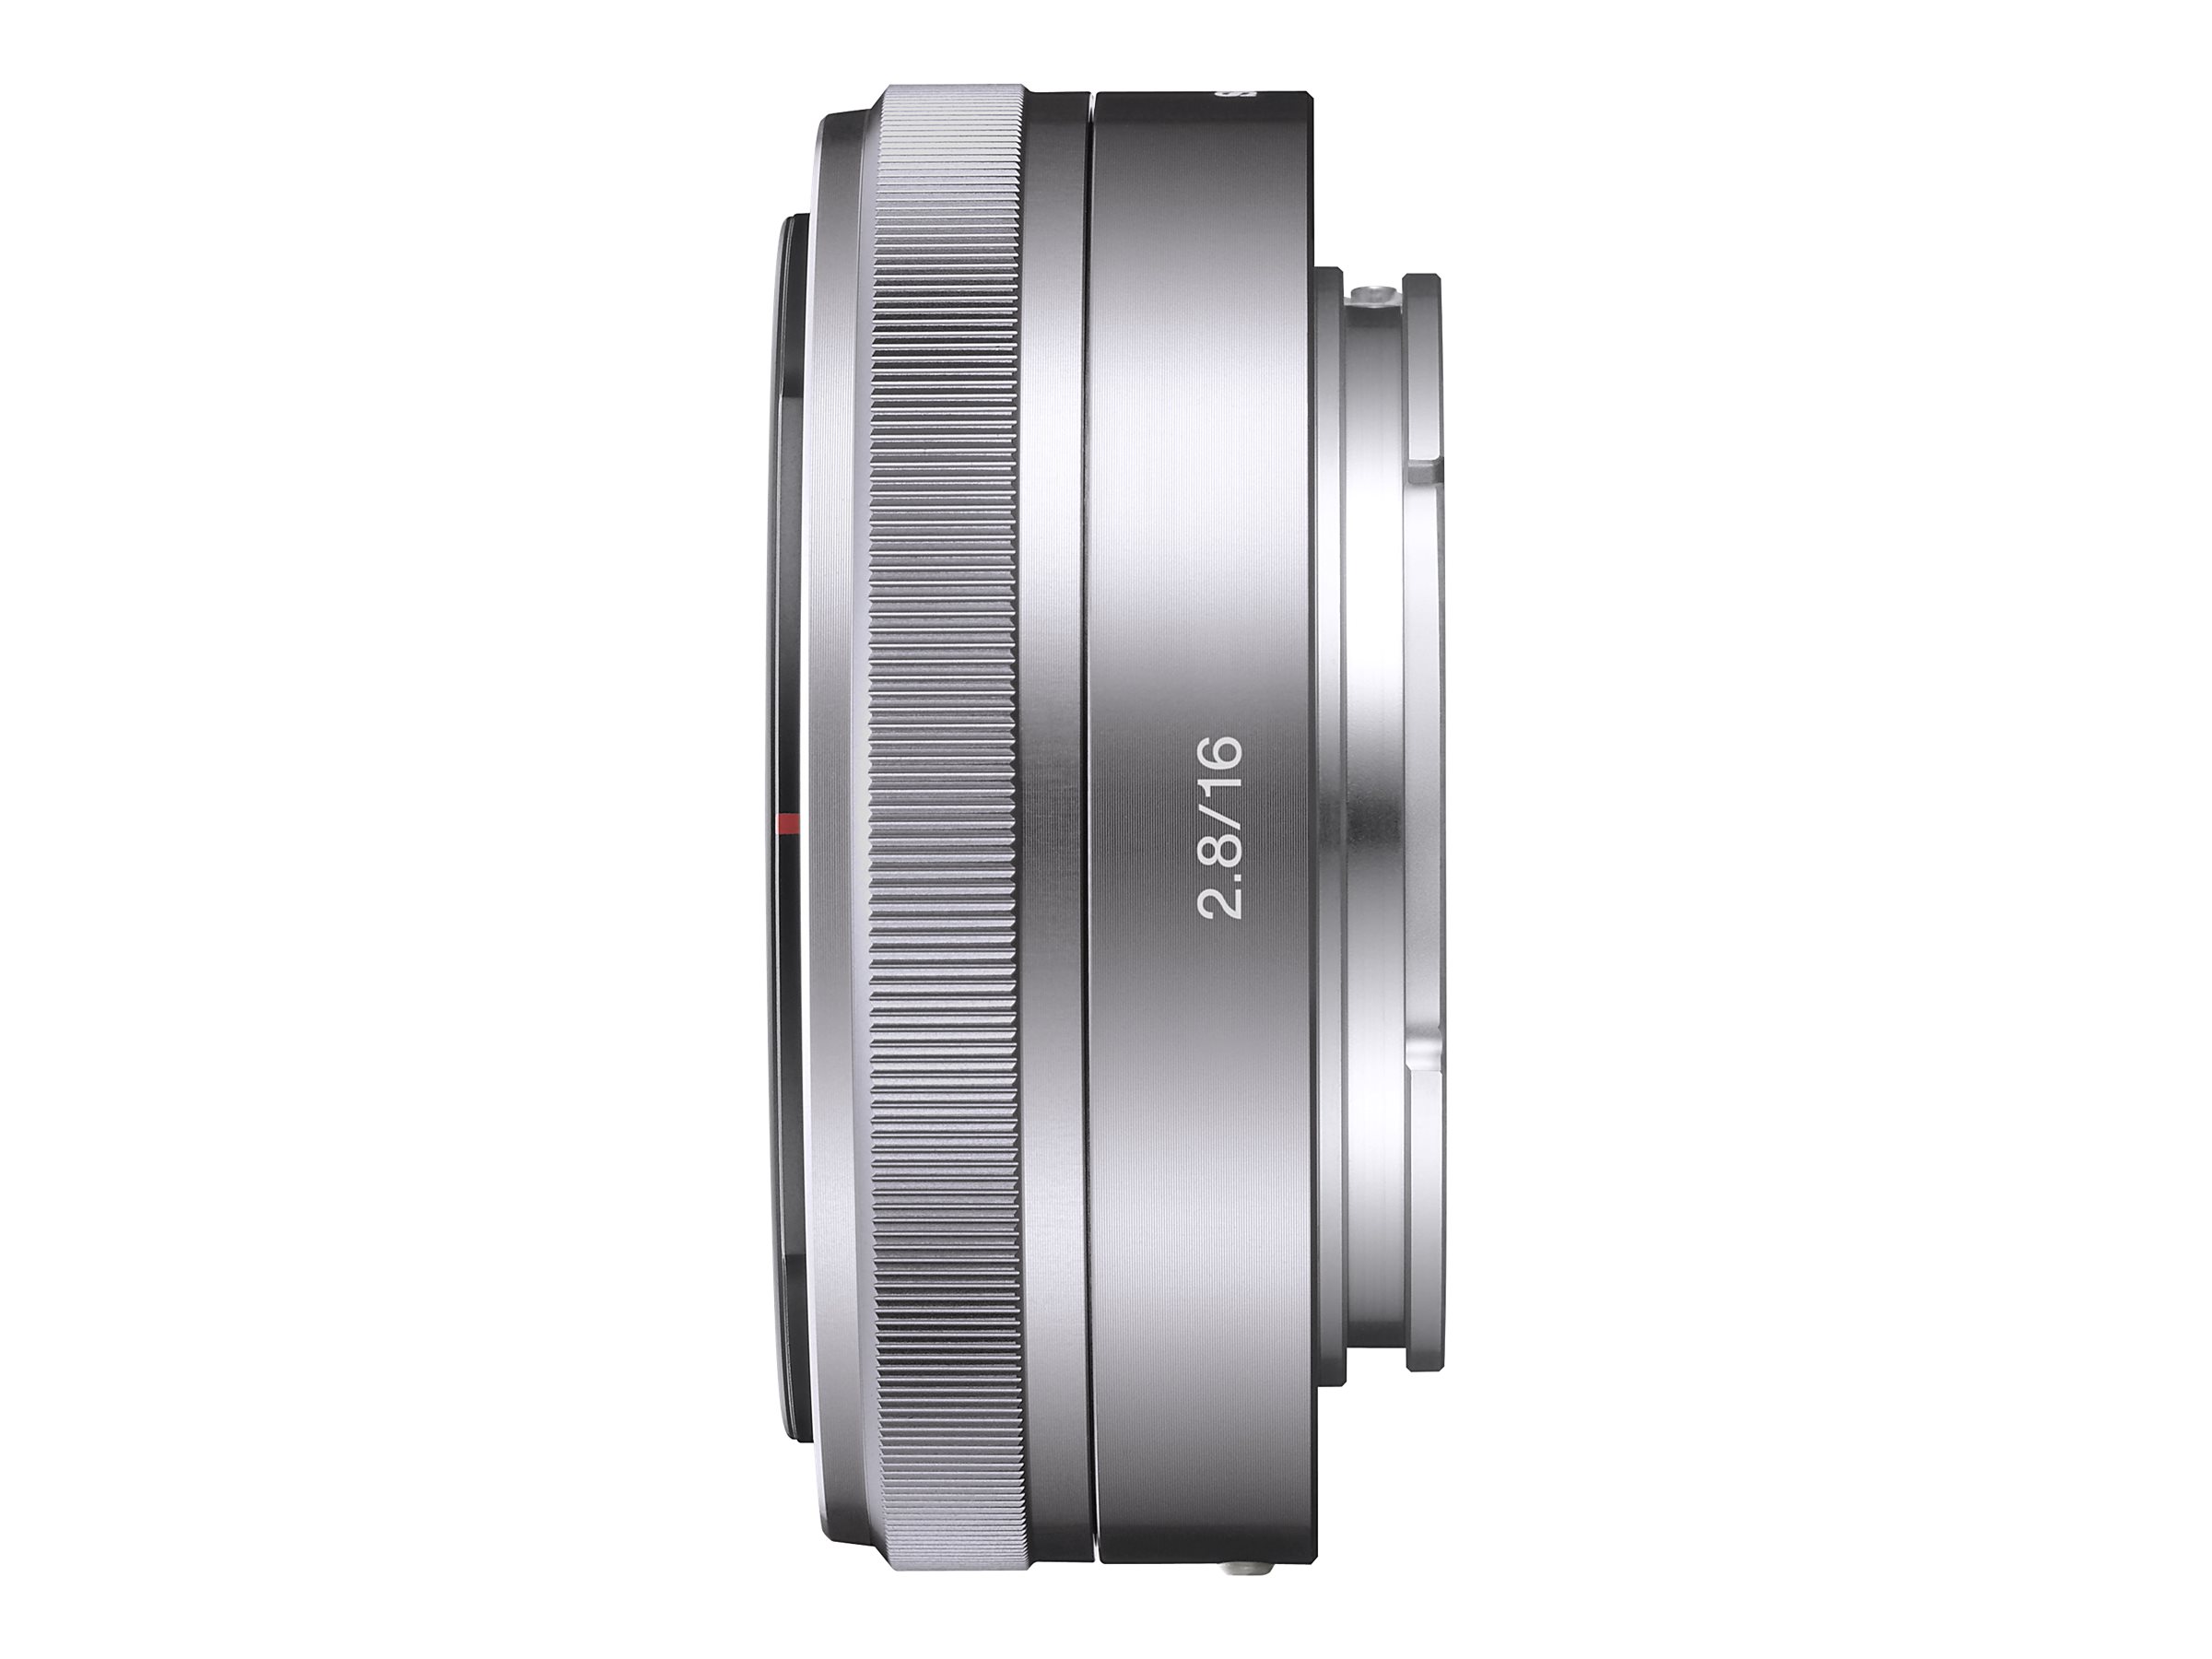 Sony NEX 16mm f/2.8 Wide-Angle Lens - SEL16F28